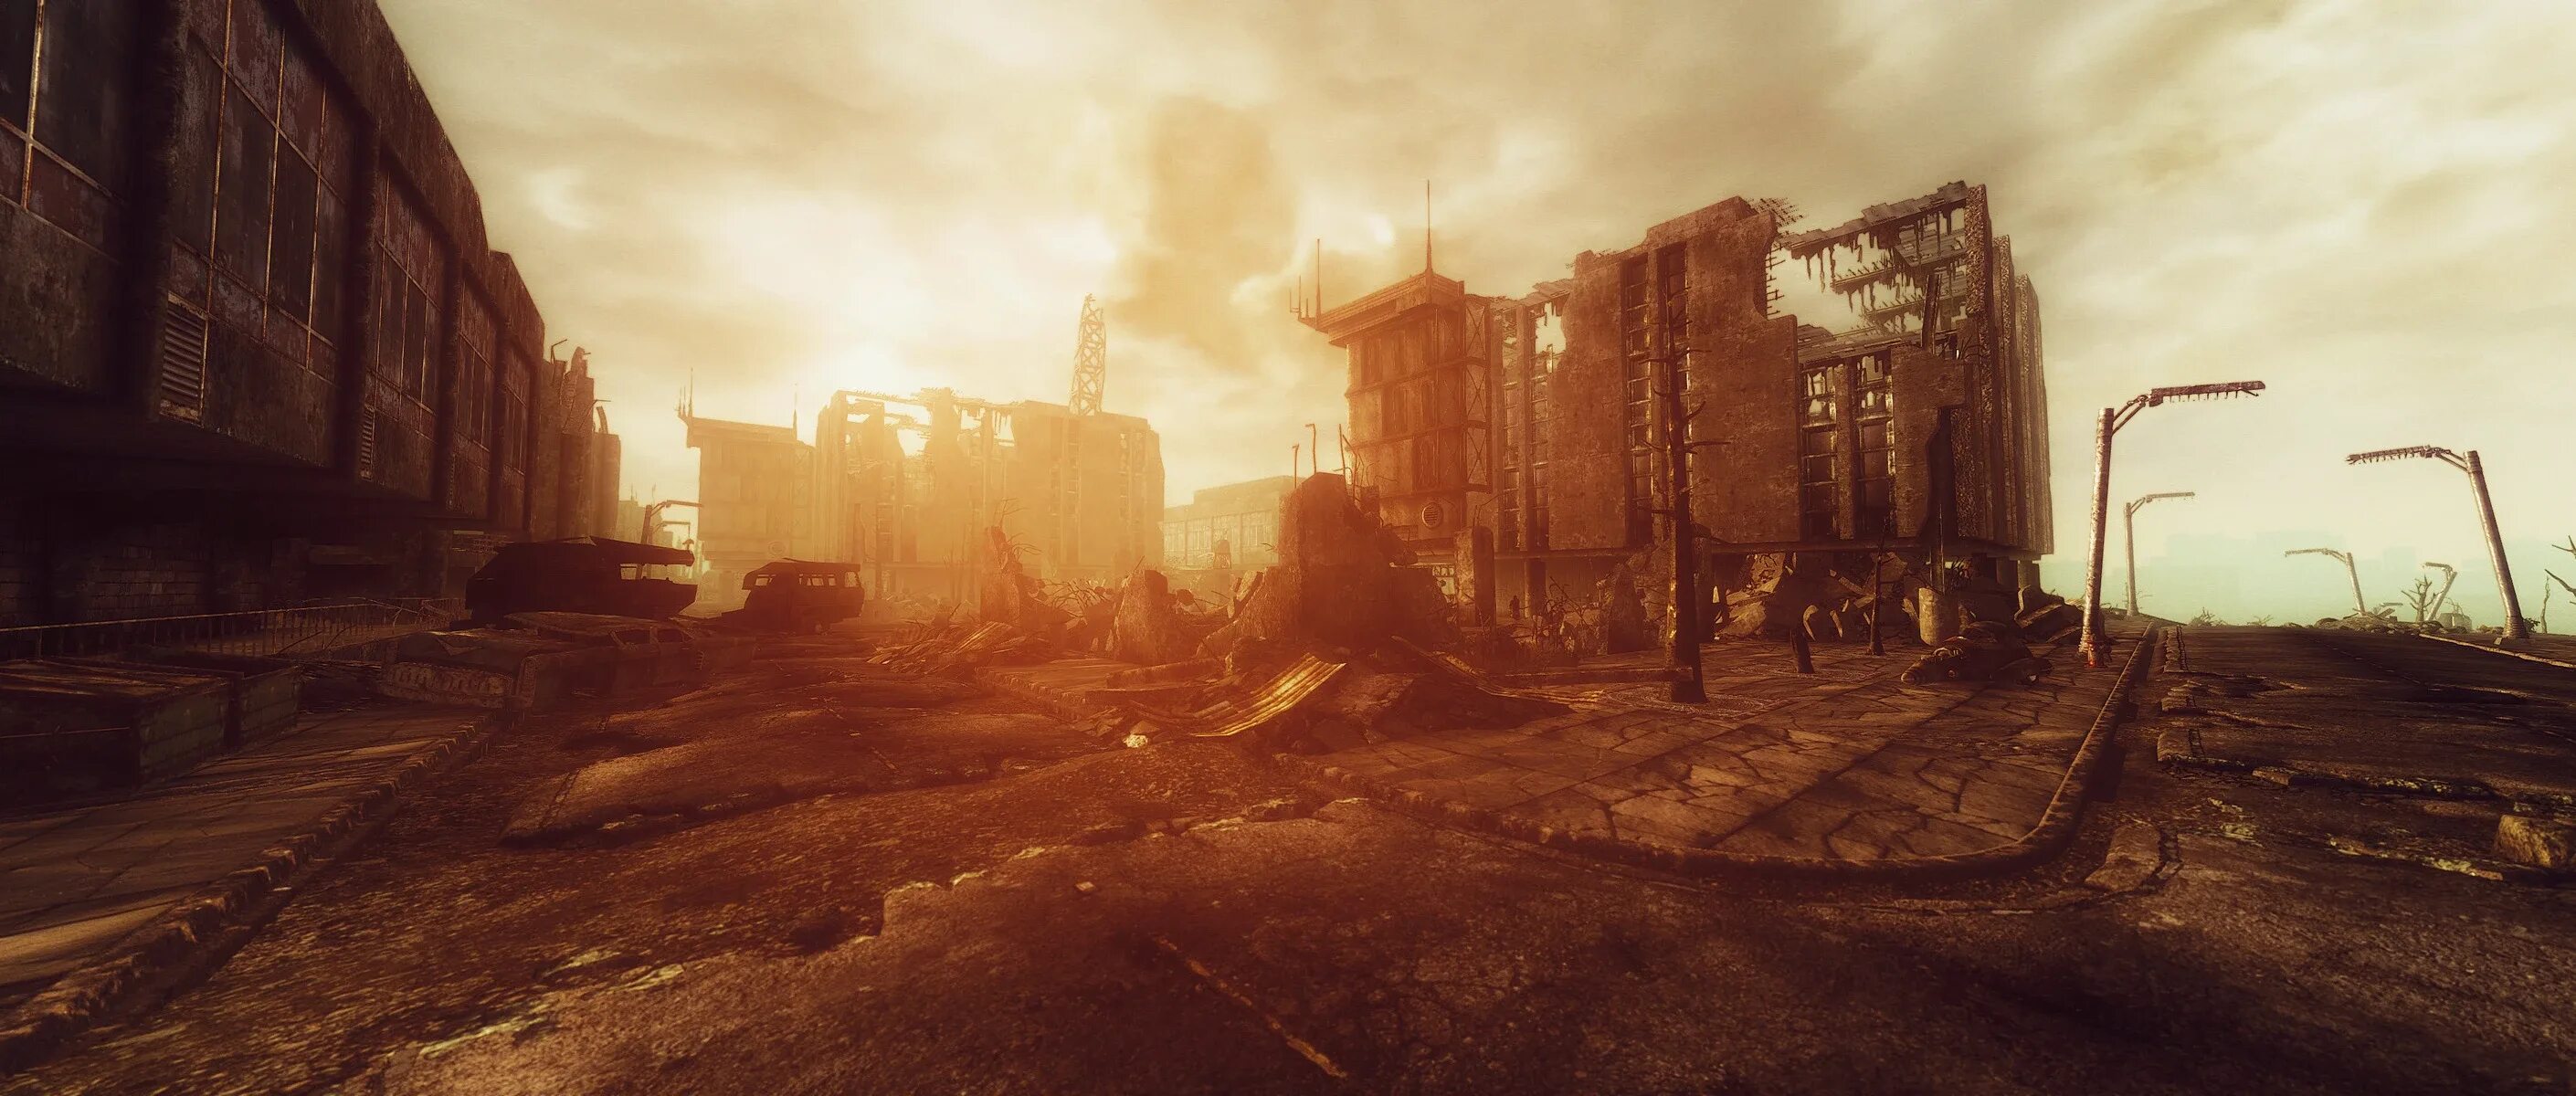 Fallout 3. Fallout Пустошь. Фоллаут 3 фон. Fallout 3 ENB Apocalypse. Fallout new enb